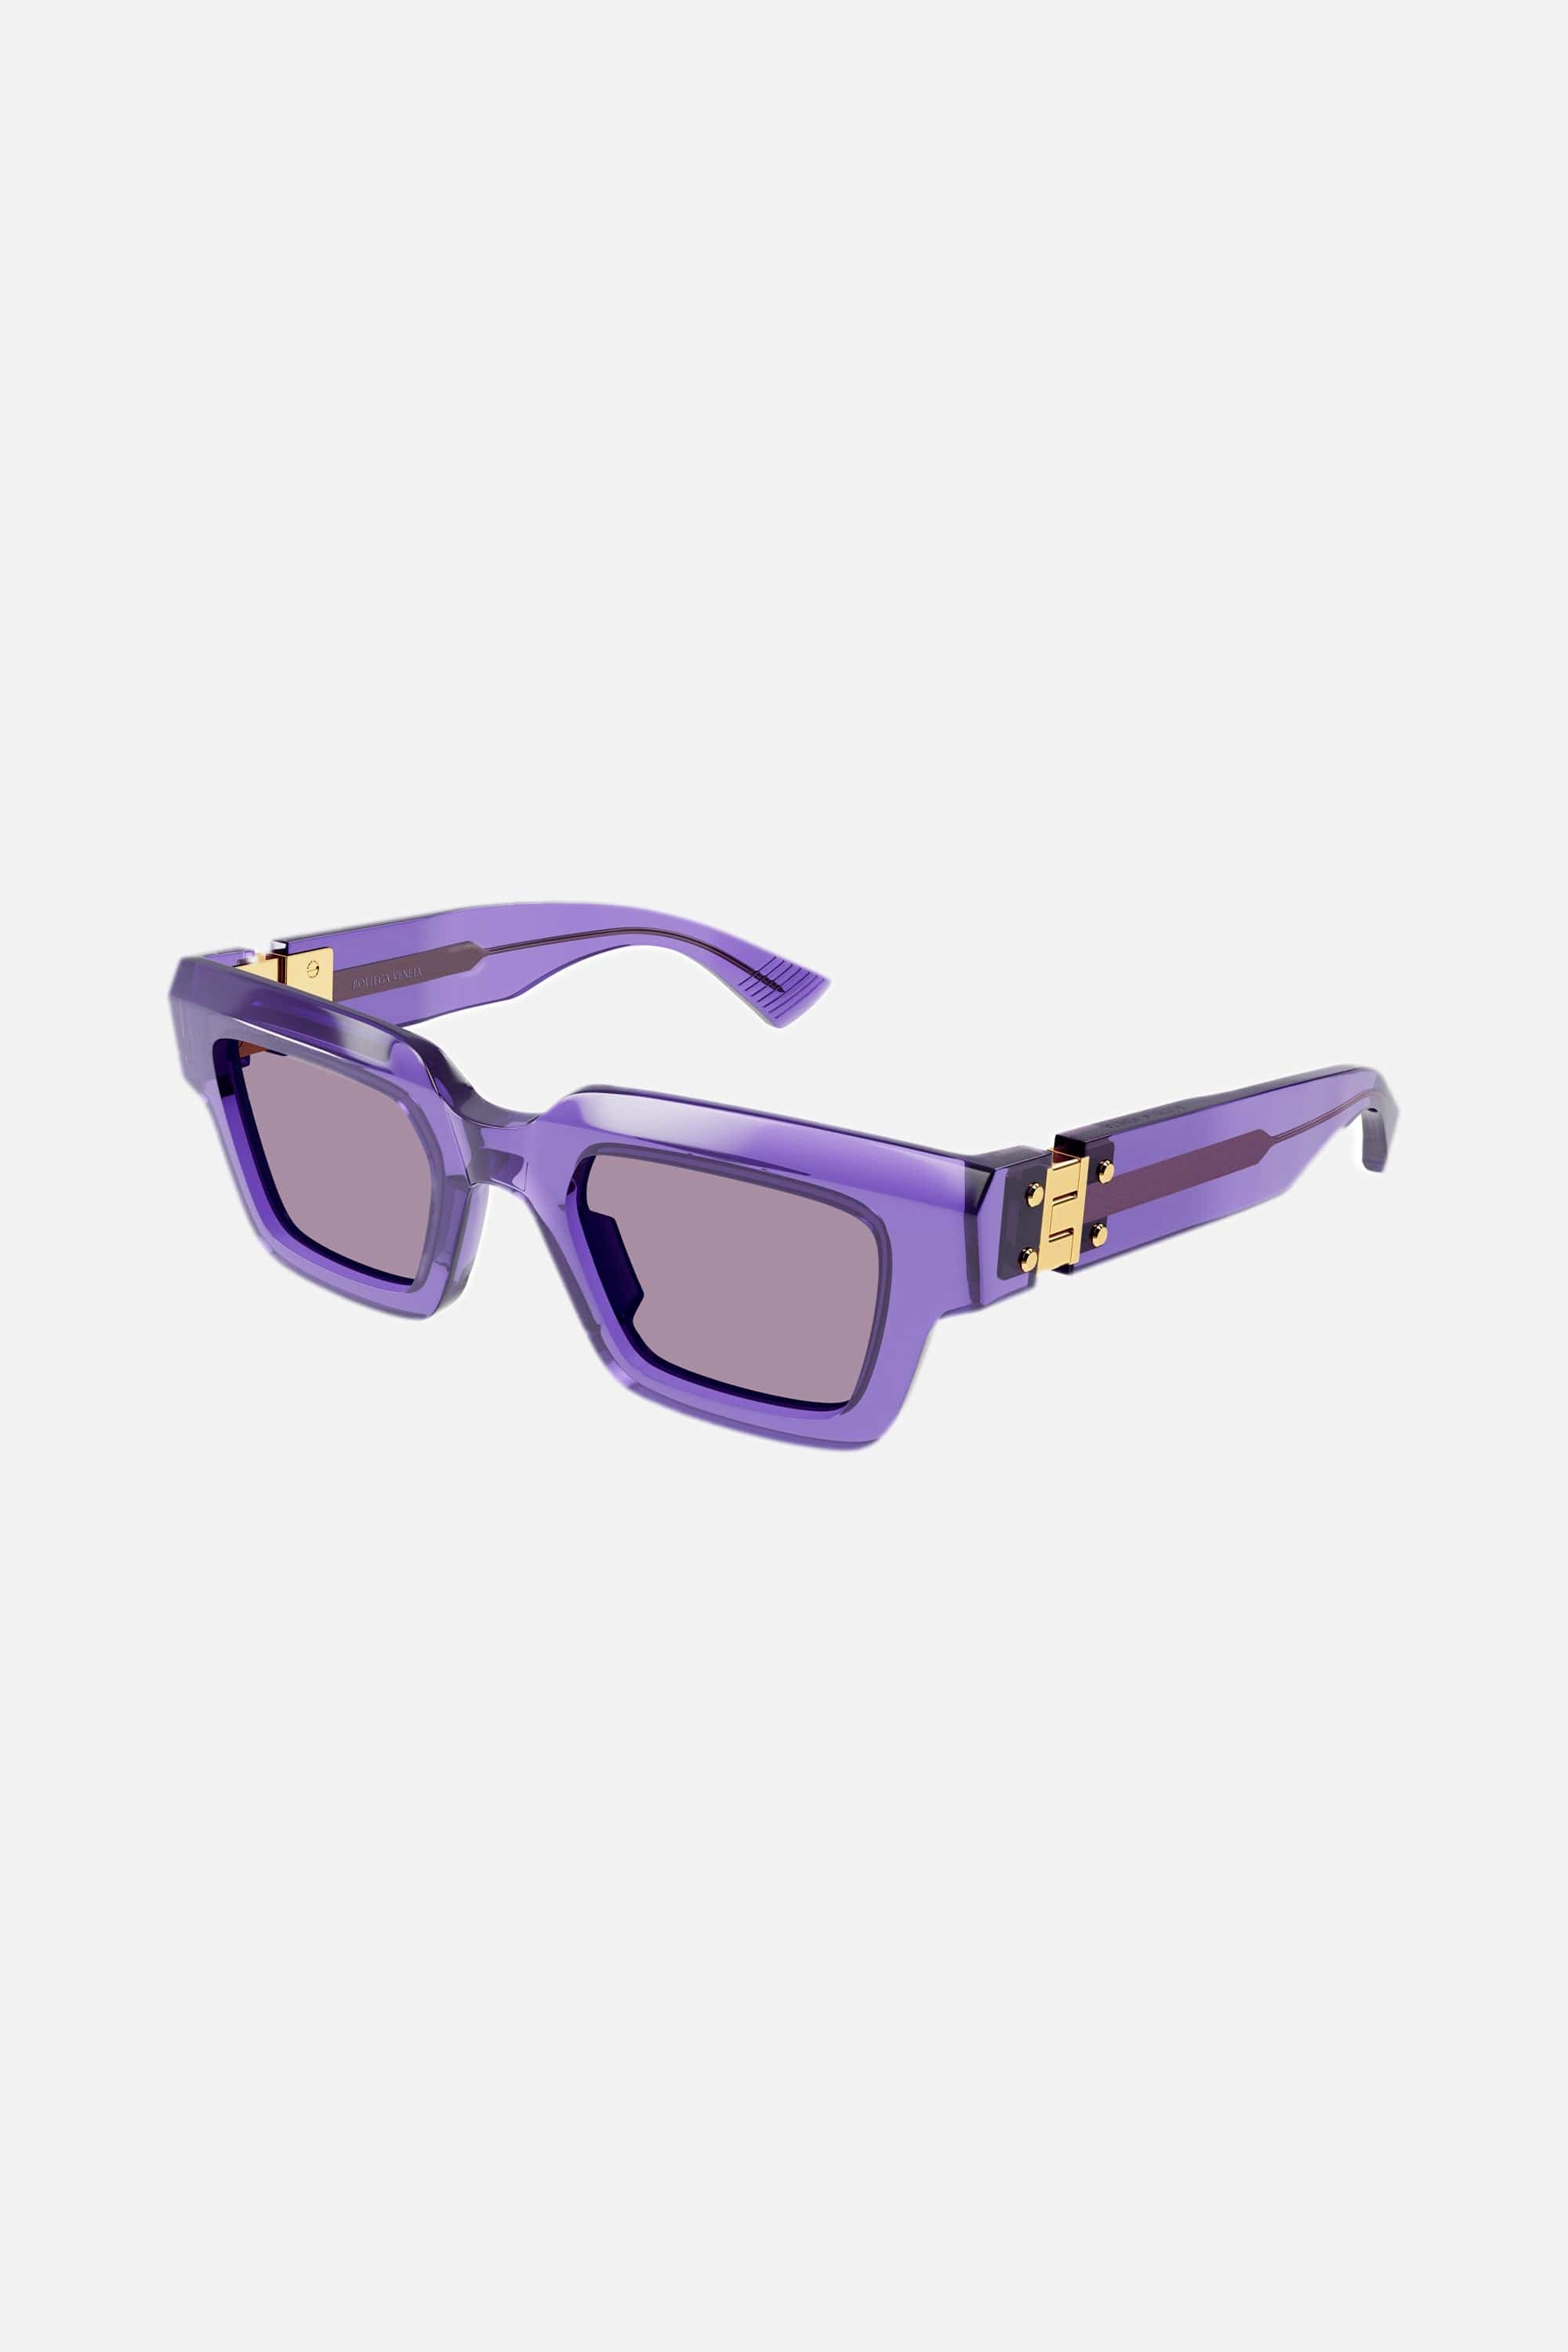 Bottega Veneta bold squared violet sunglasses - Eyewear Club